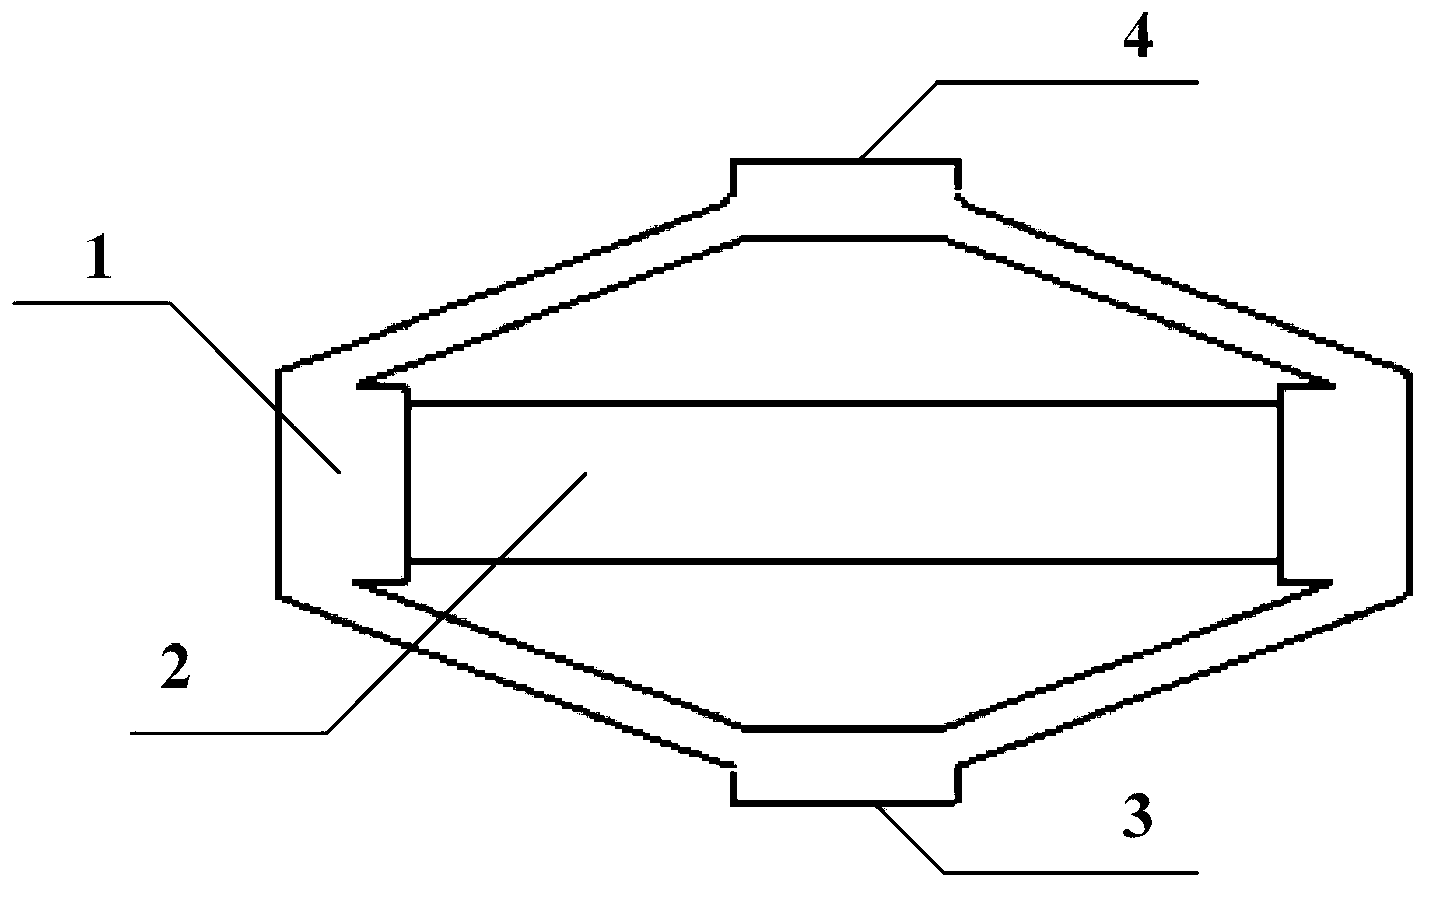 Orthogonal piezoelectric displacement amplifying mechanism